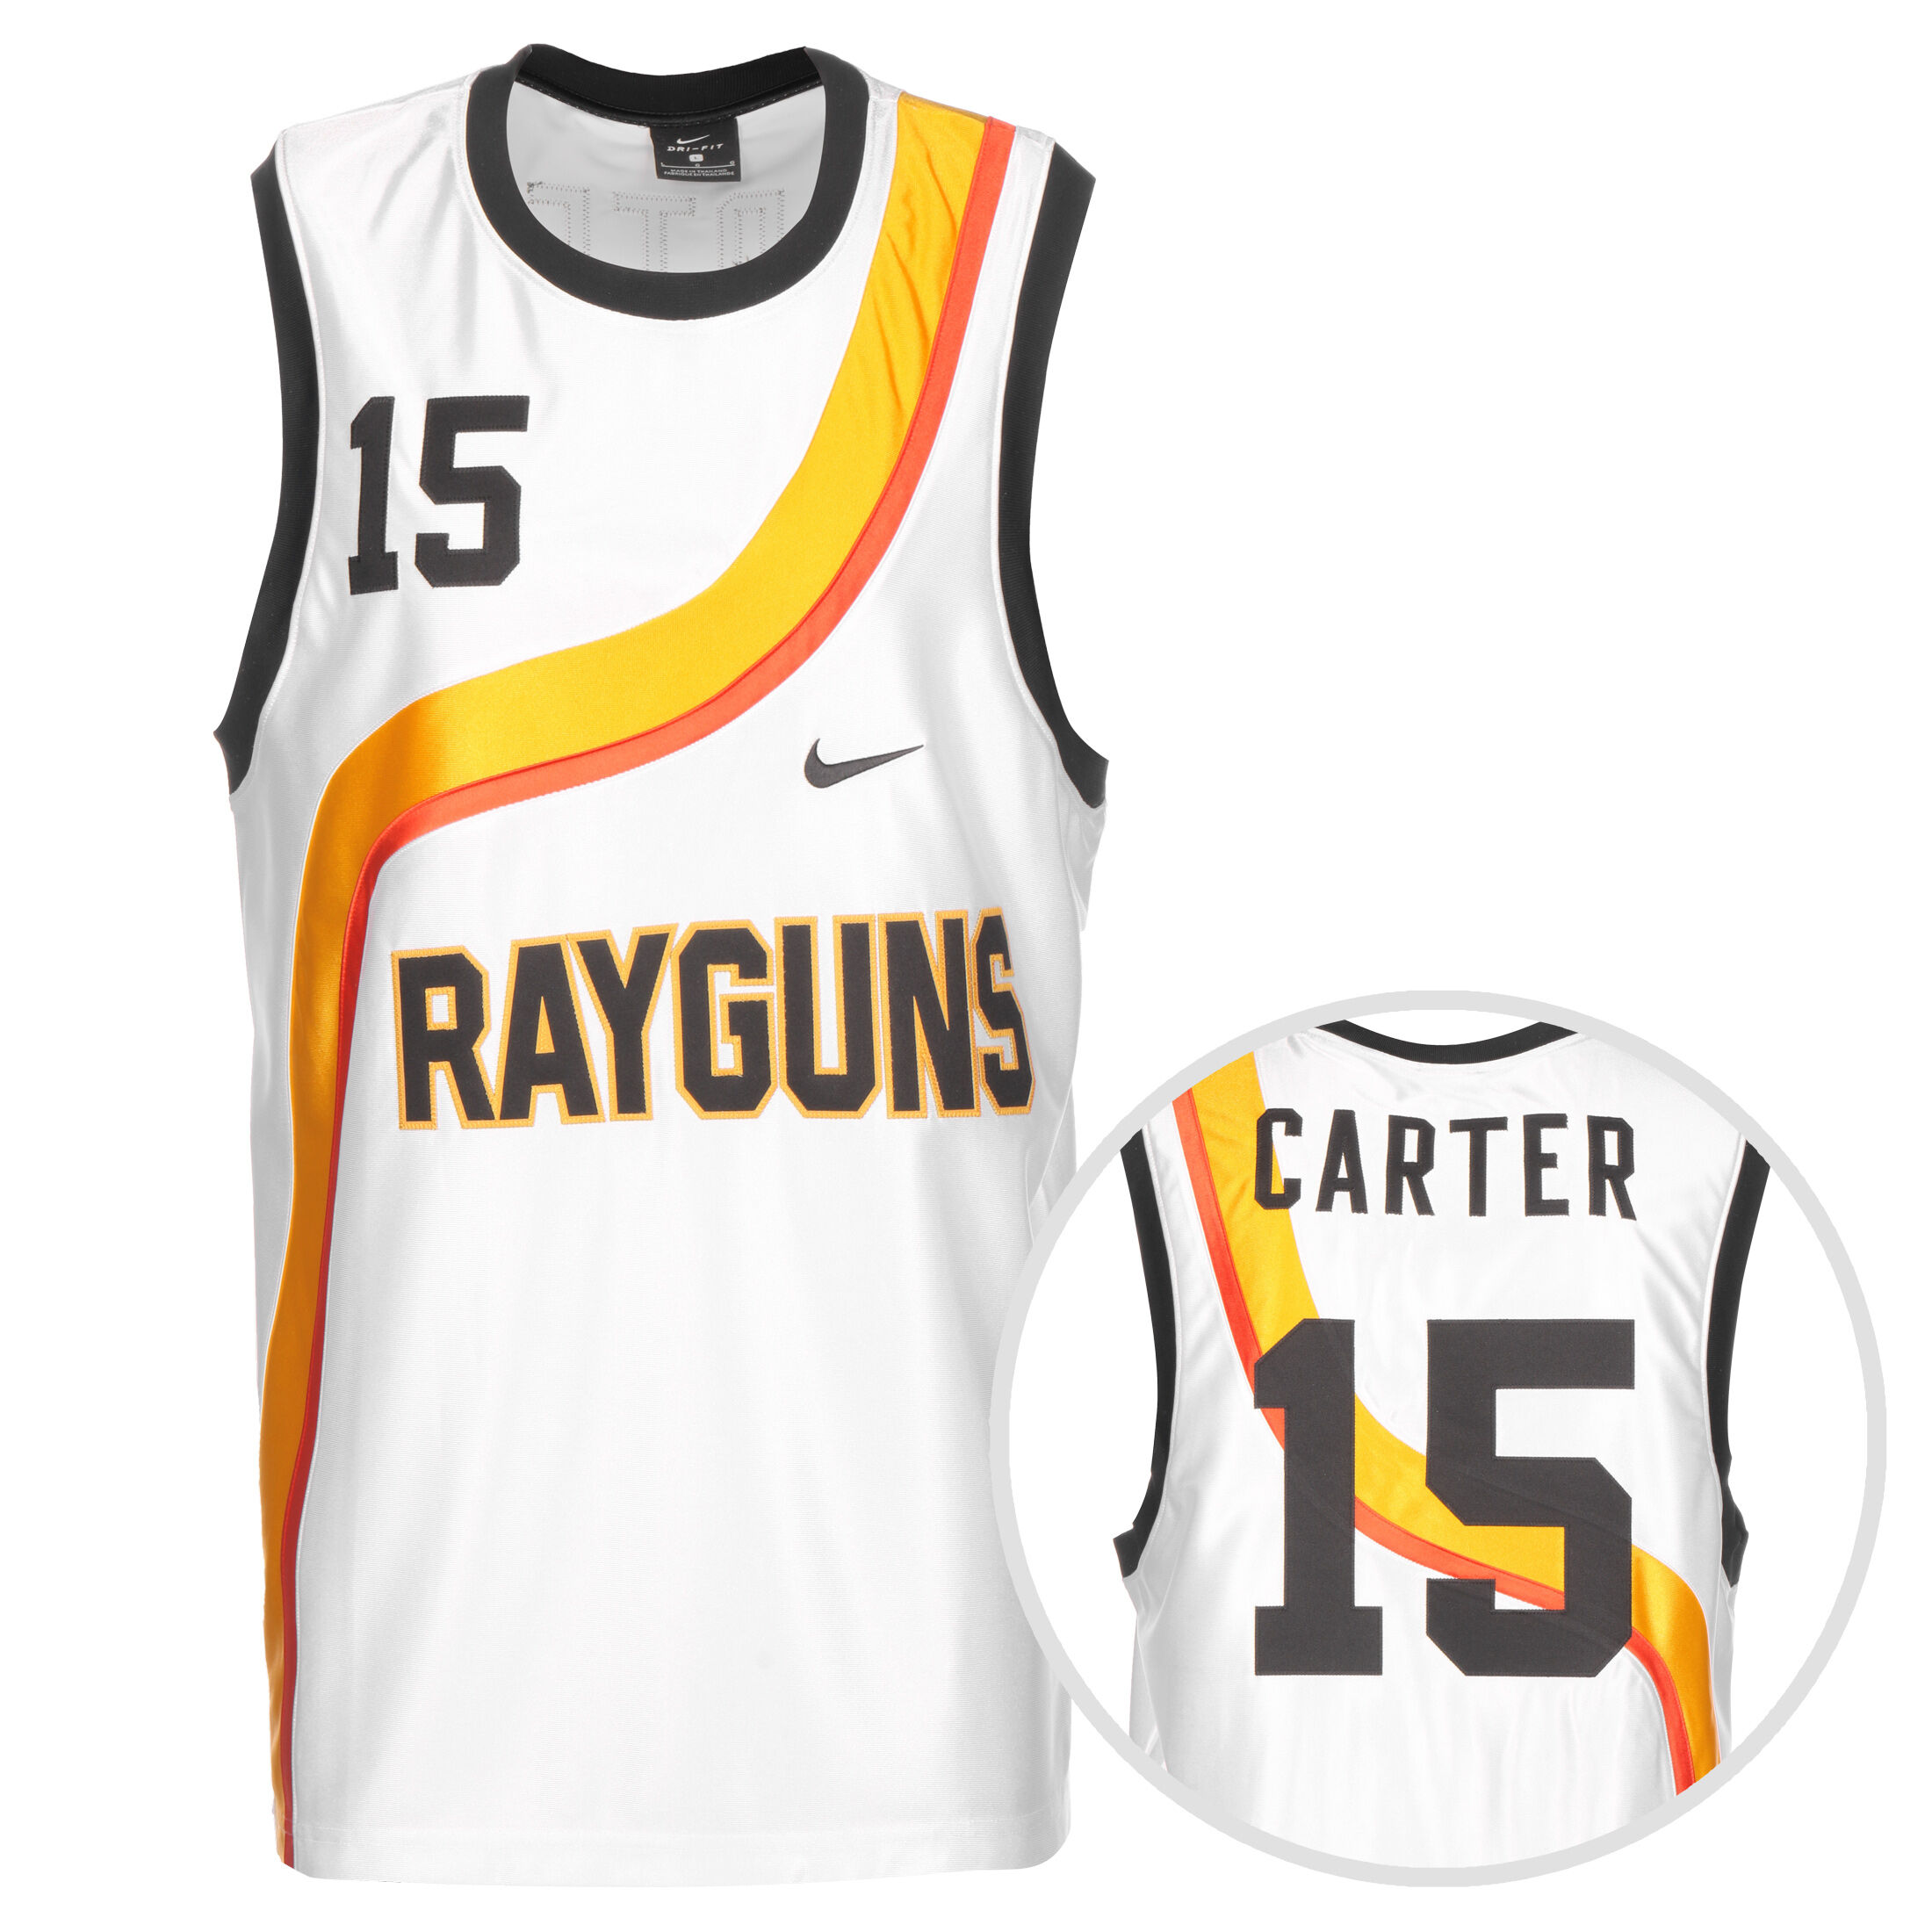 Рубашка Nike Basketballtrikot Rayguns Premium, белый